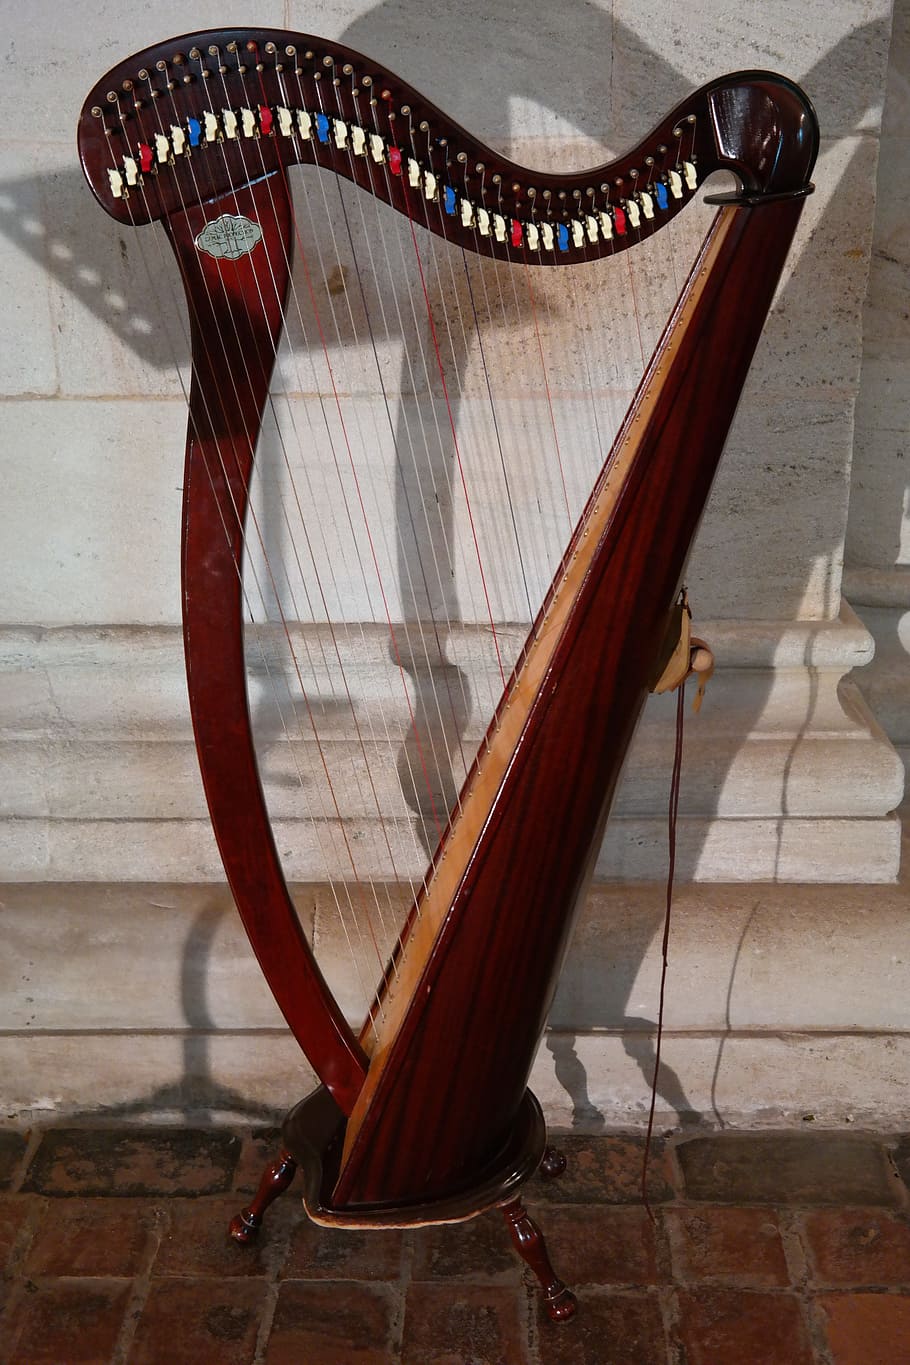 plucked, Harp, Plucked String Instrument, stringed instrument, strings, voice pins, neck, head, knee, concert harp